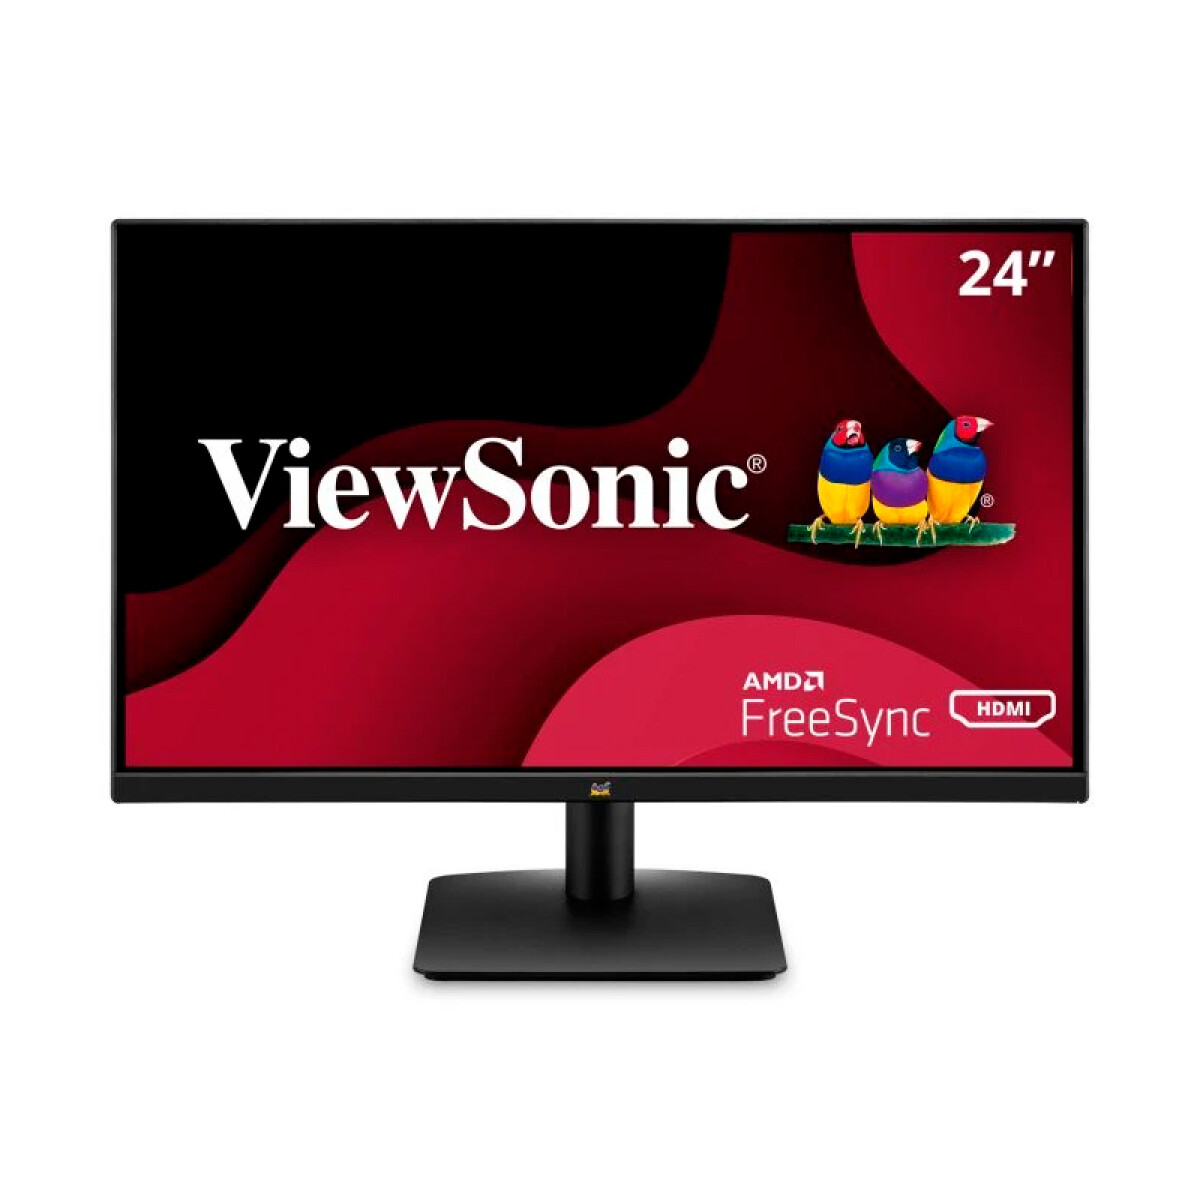 Monitor Viewsonic 24" LED FULL HD HDMI - VGA - Unica 